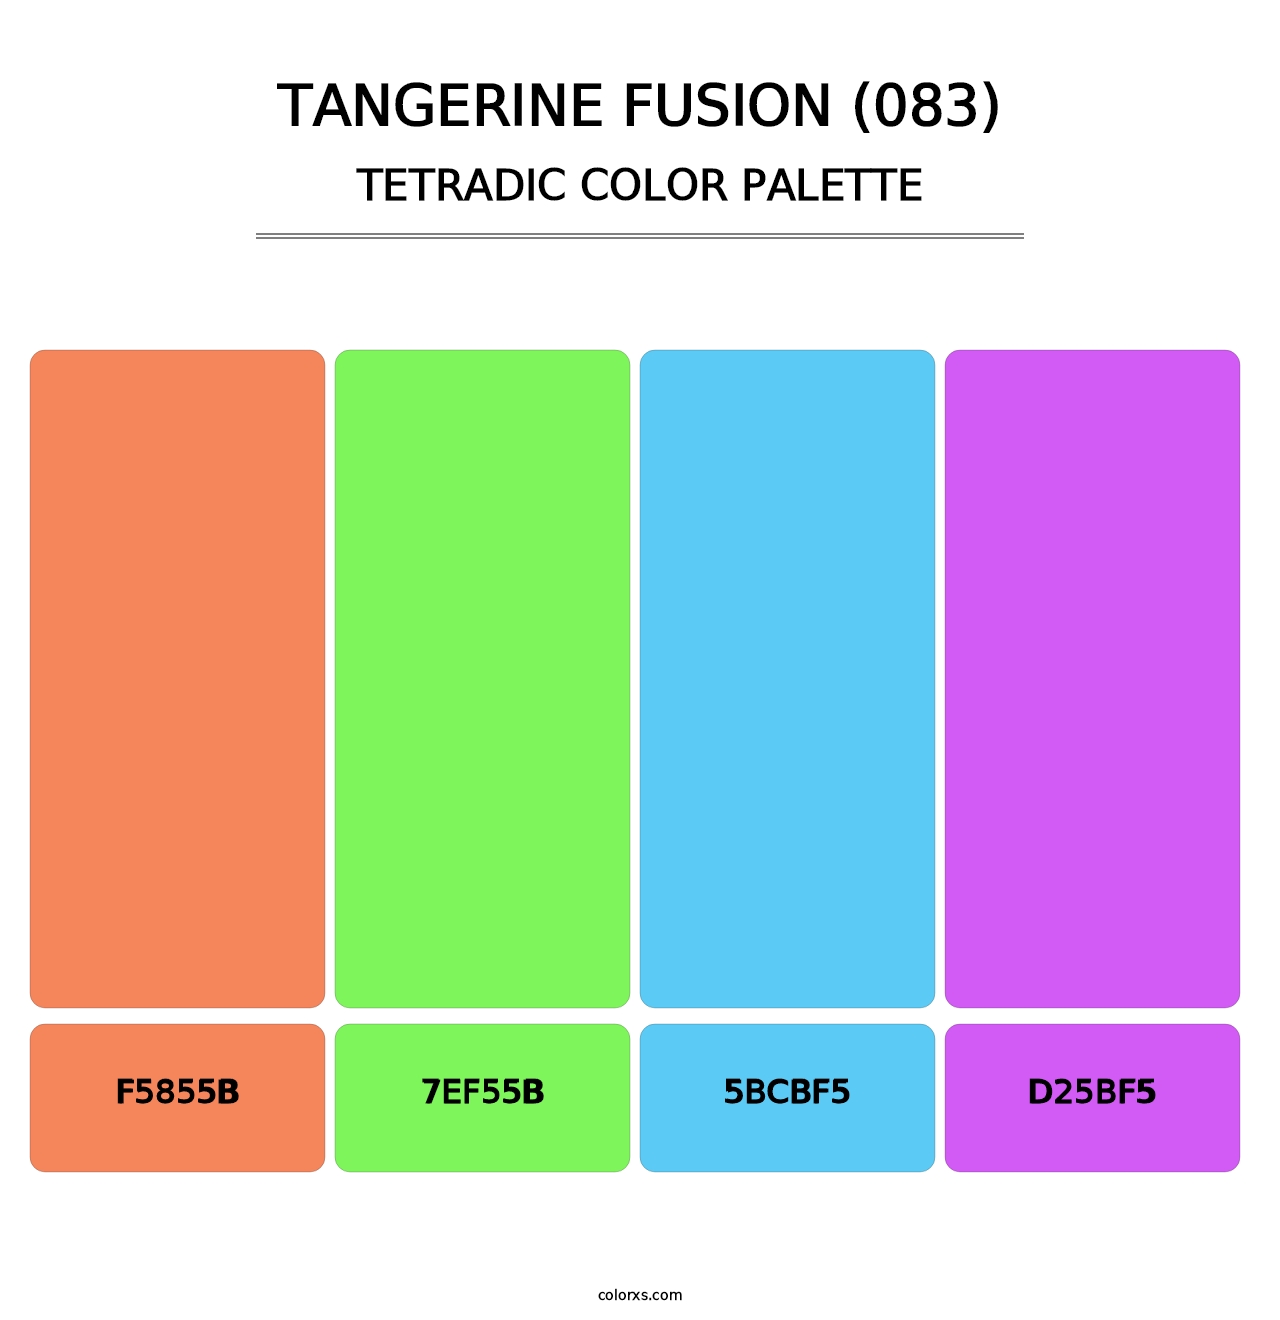 Tangerine Fusion (083) - Tetradic Color Palette